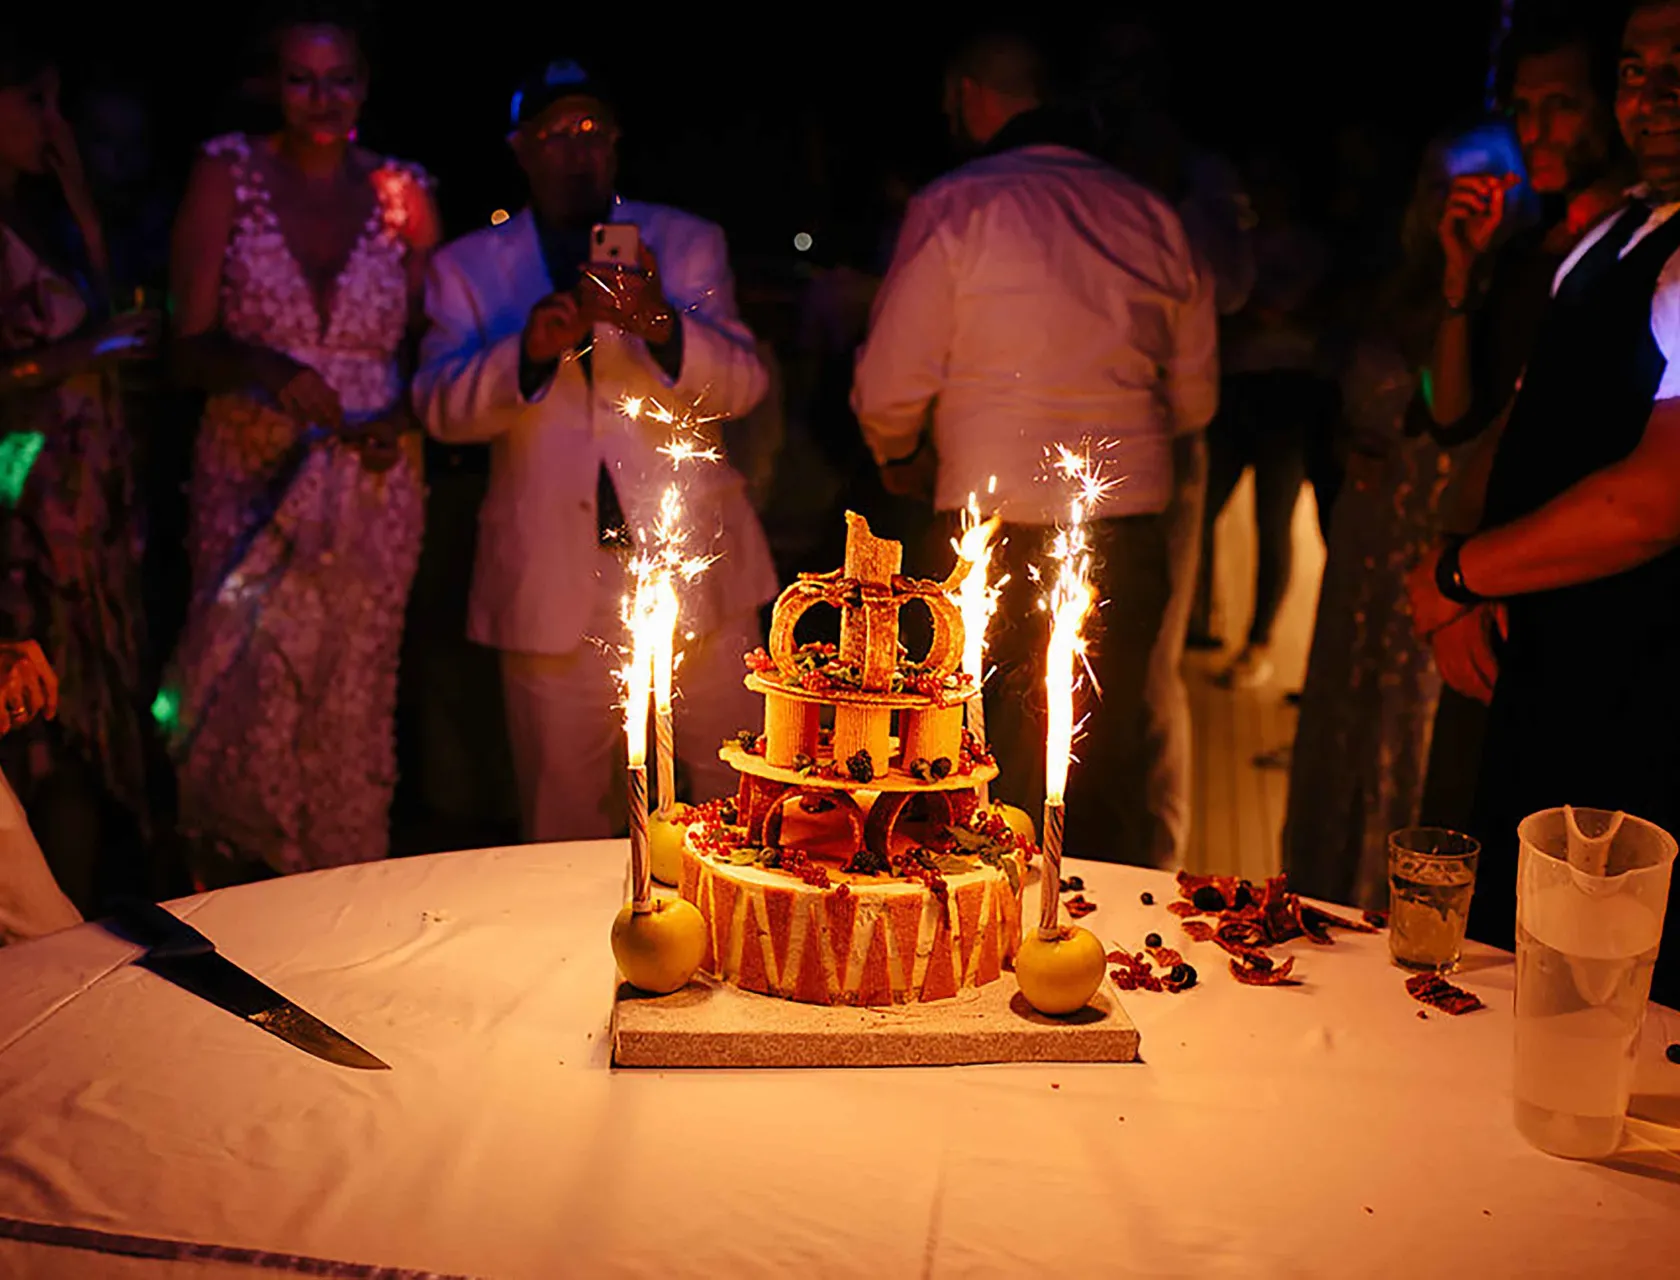 Celebrating Your Birthday Aboard a Luxury Yacht